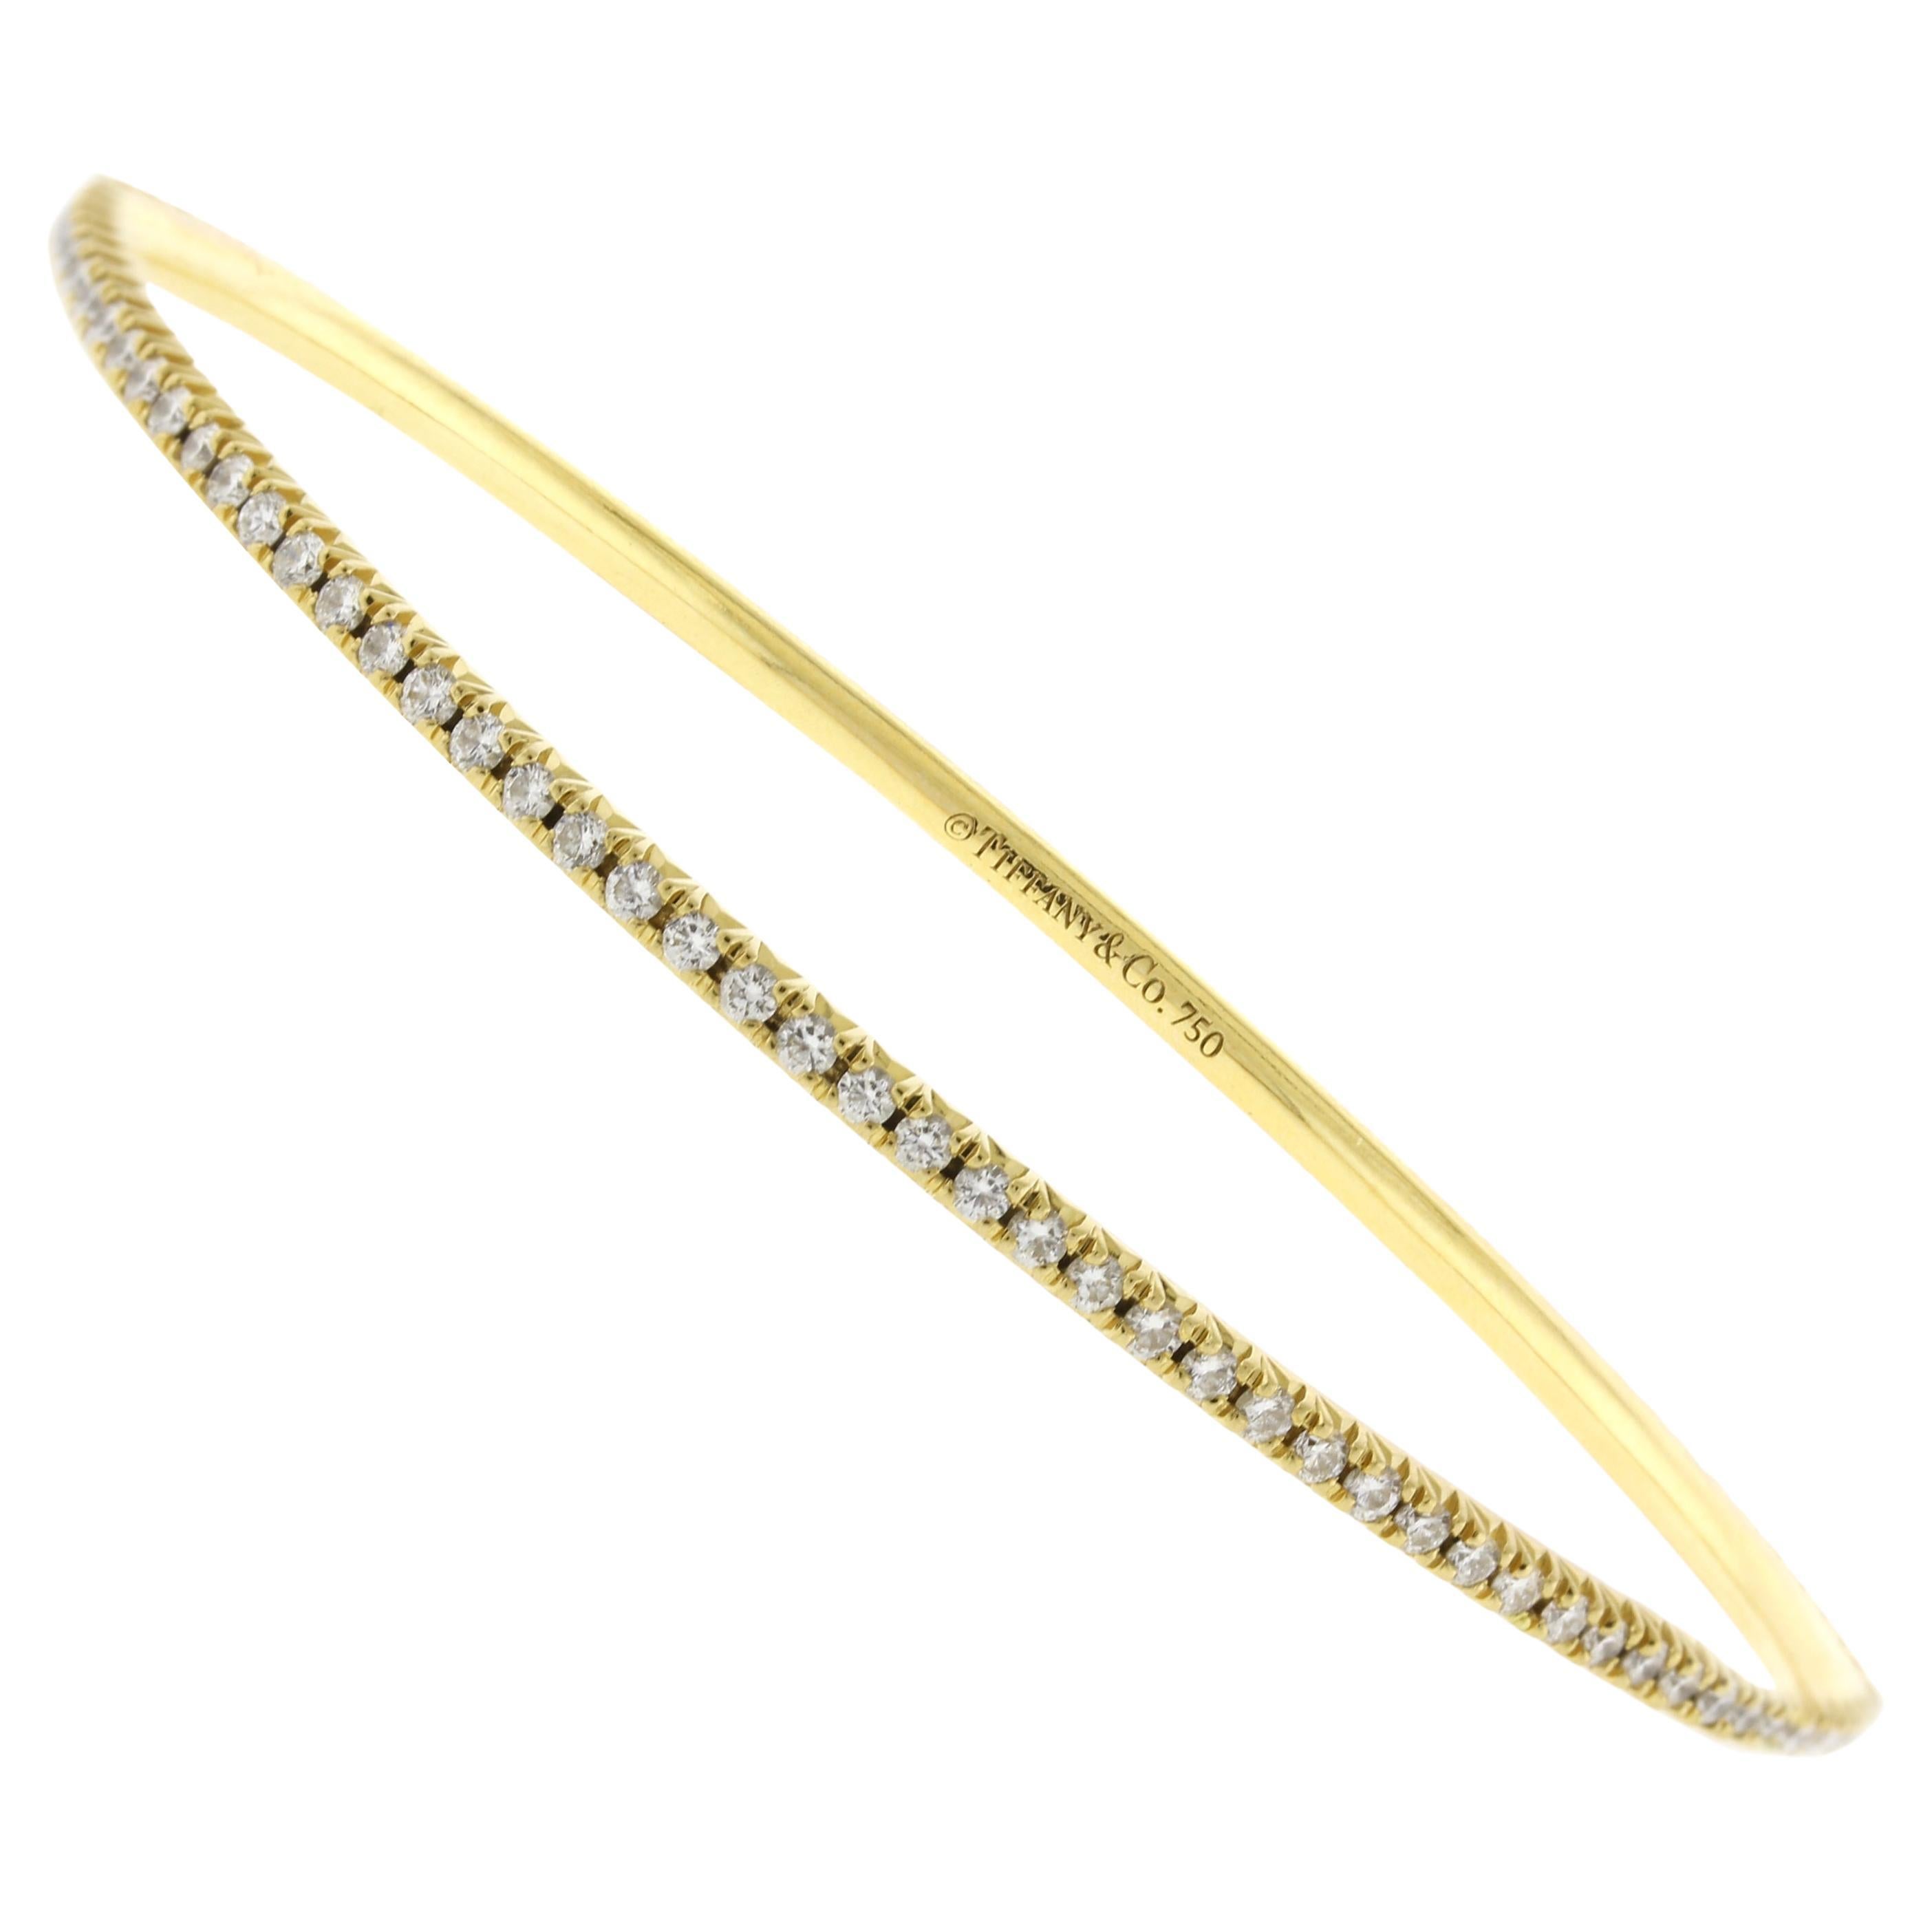 Tiffany & Co.'s Metro Bracelet with Diamonds